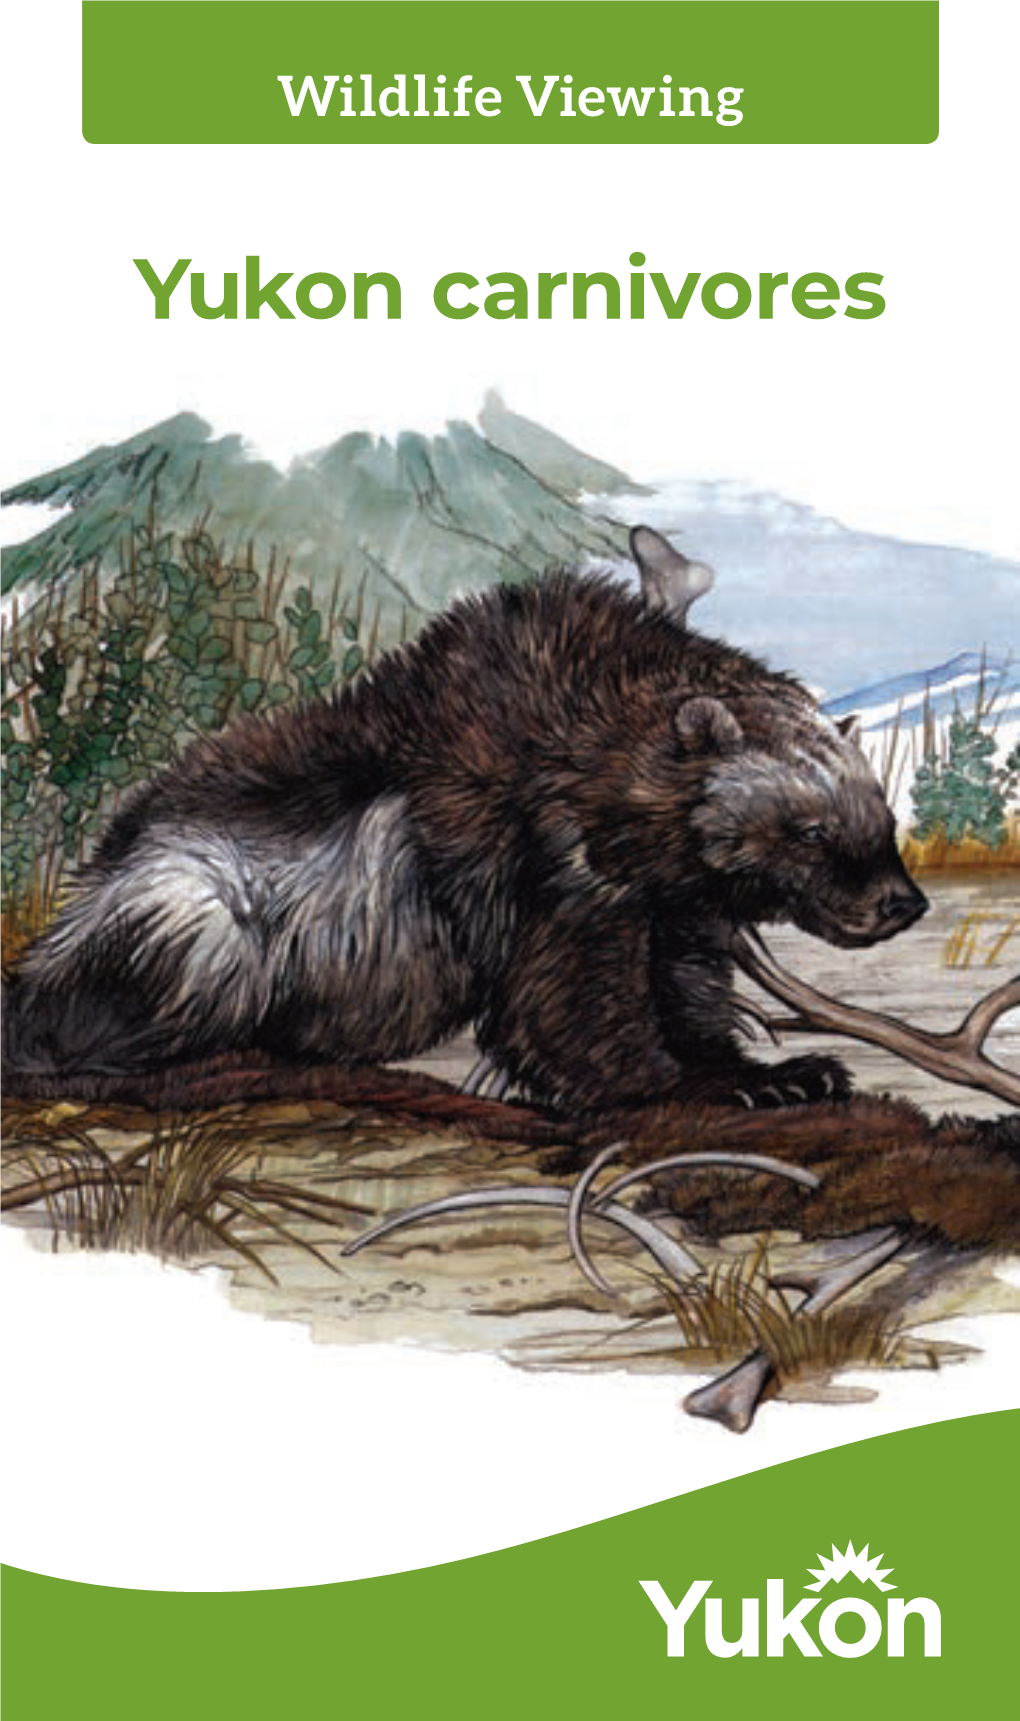 Yukon Carnivores Grey Wolf